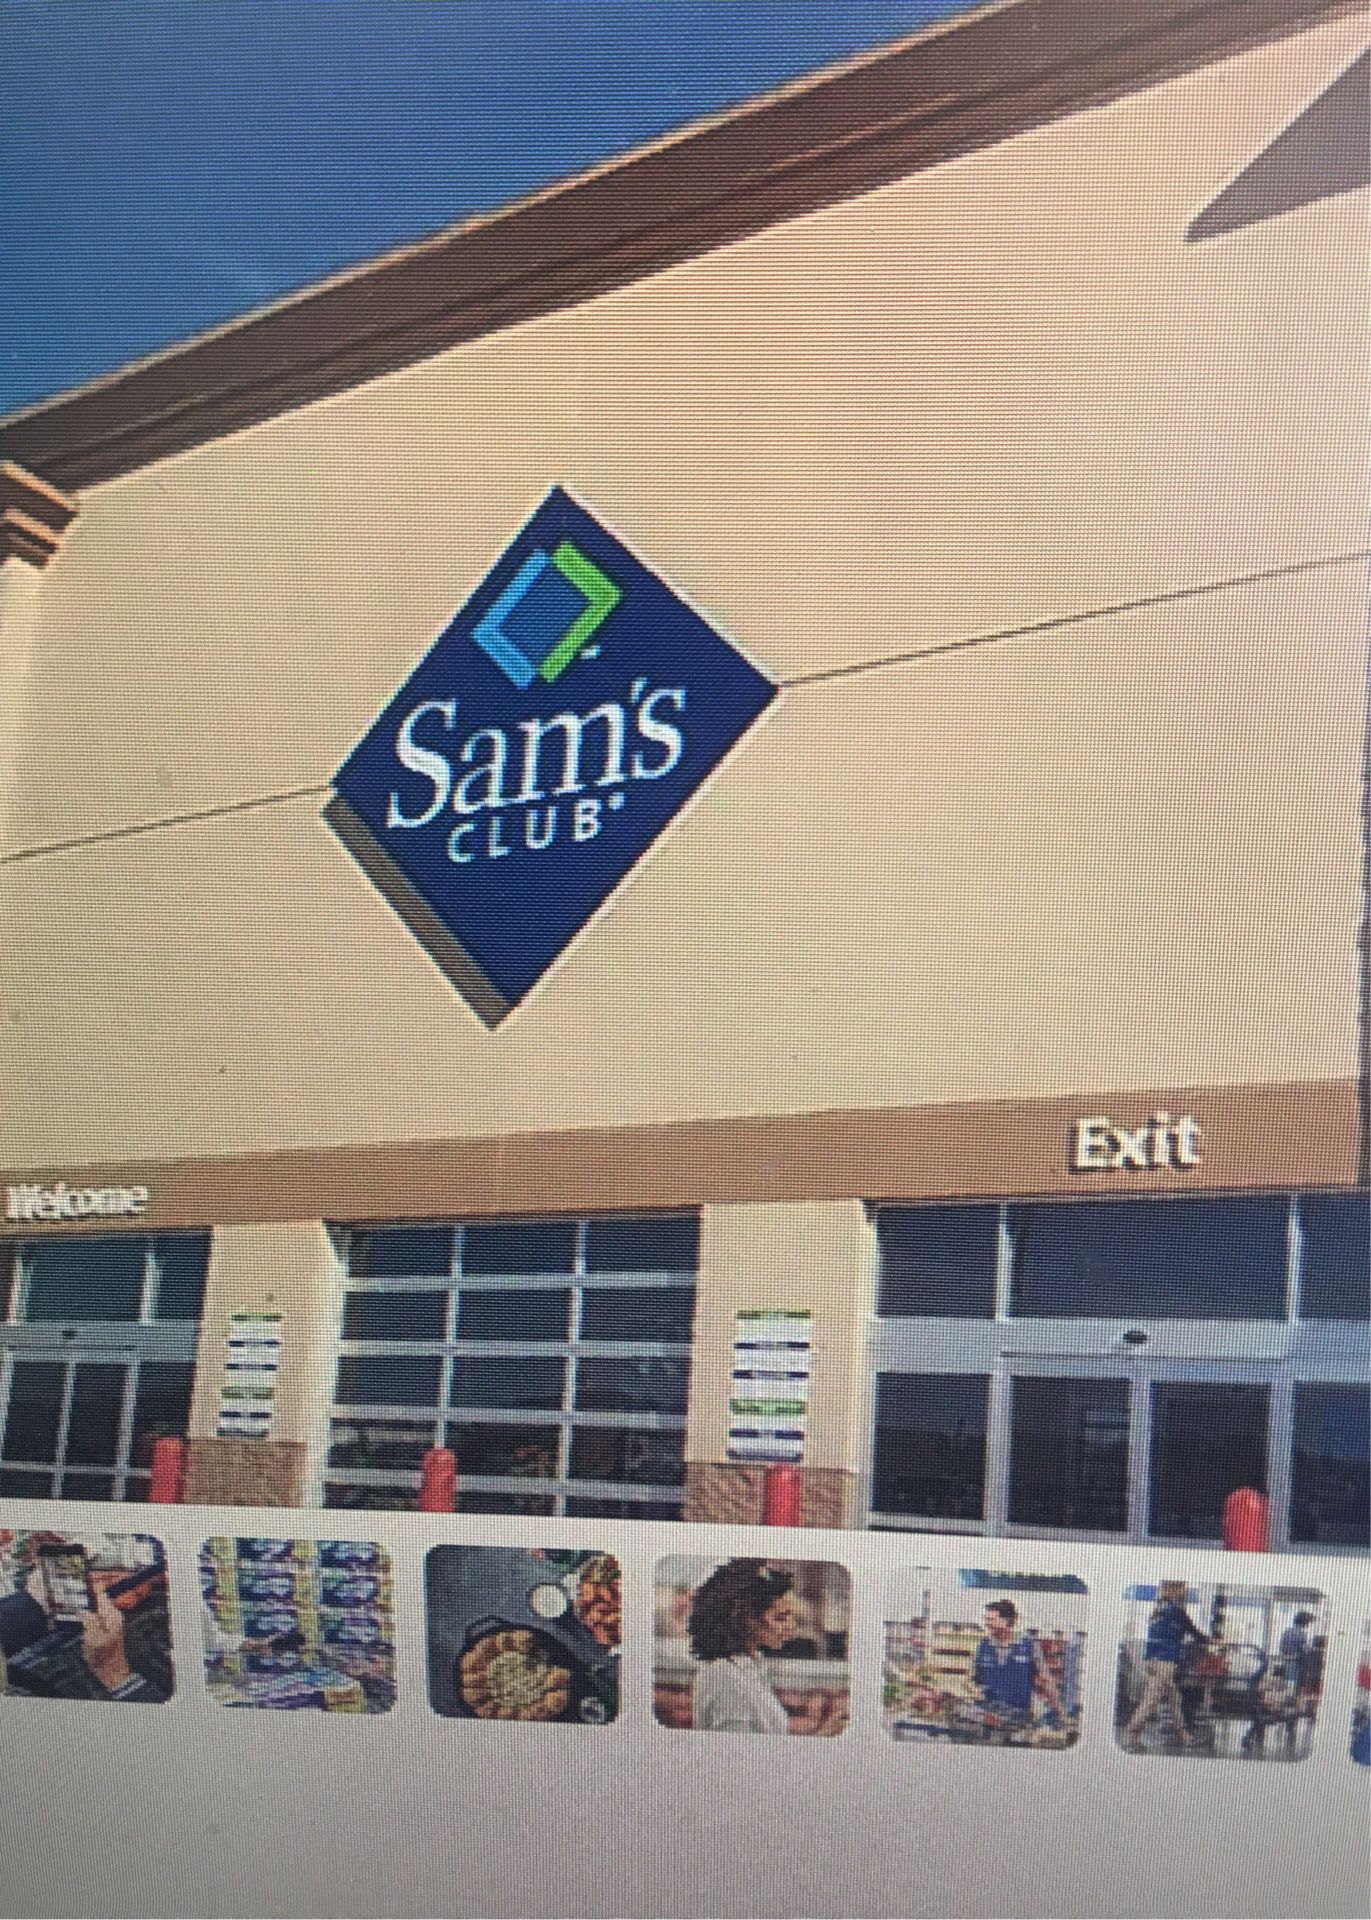 Sam’s Club Membership